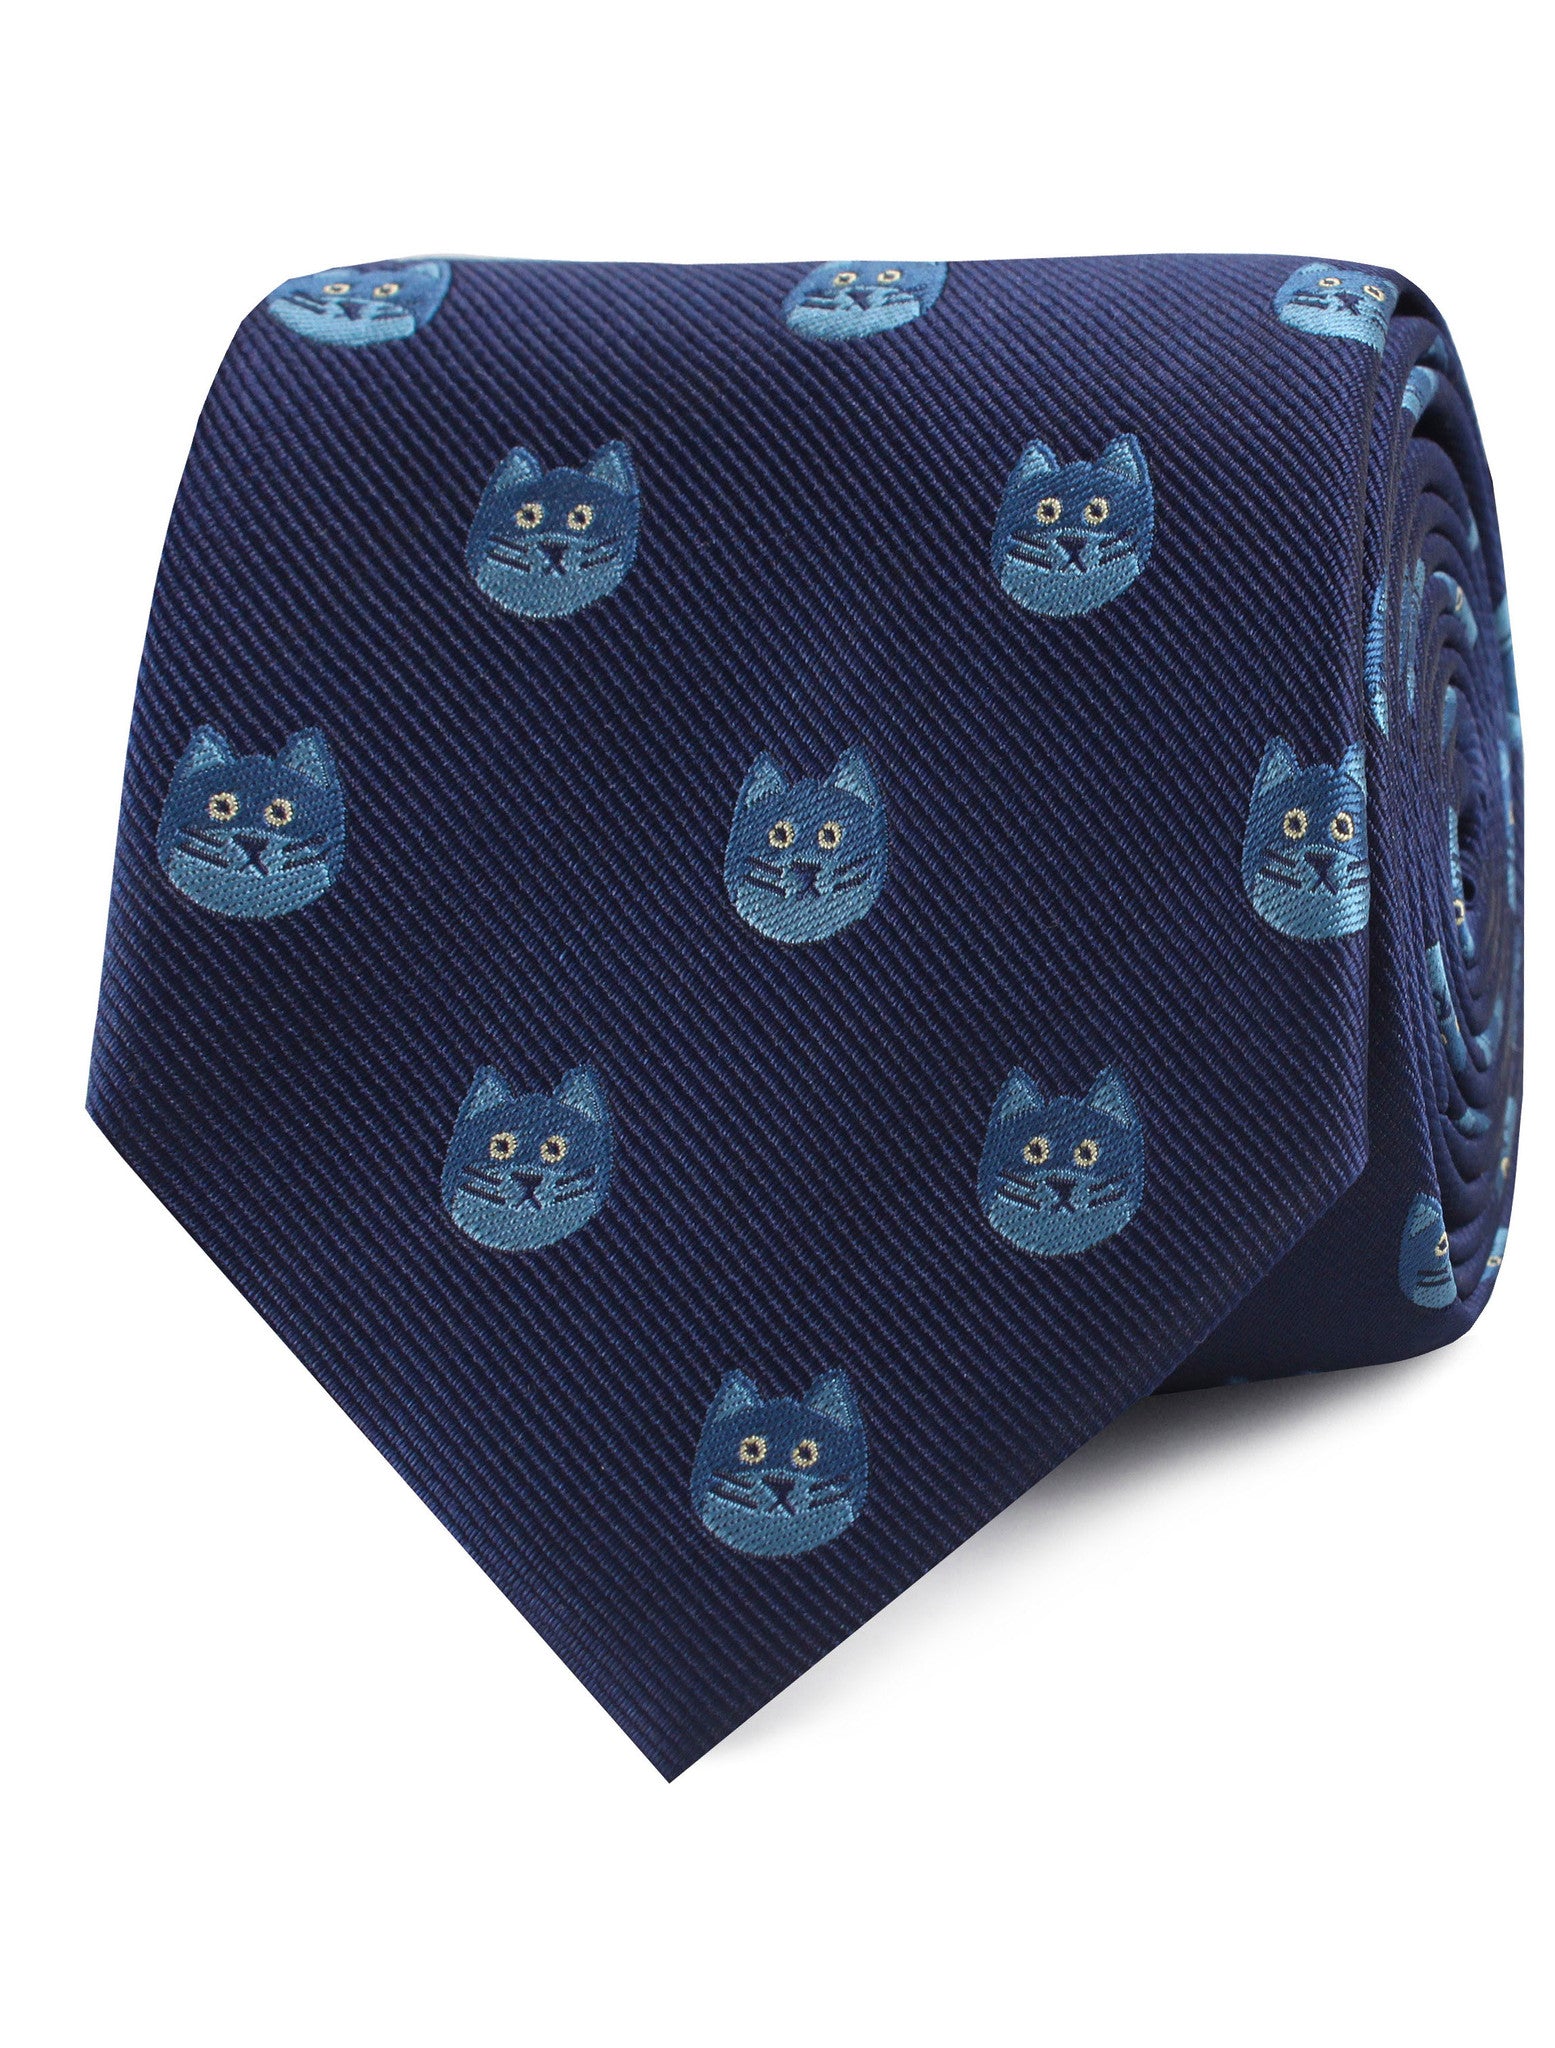 Cheshire Cat Face Necktie